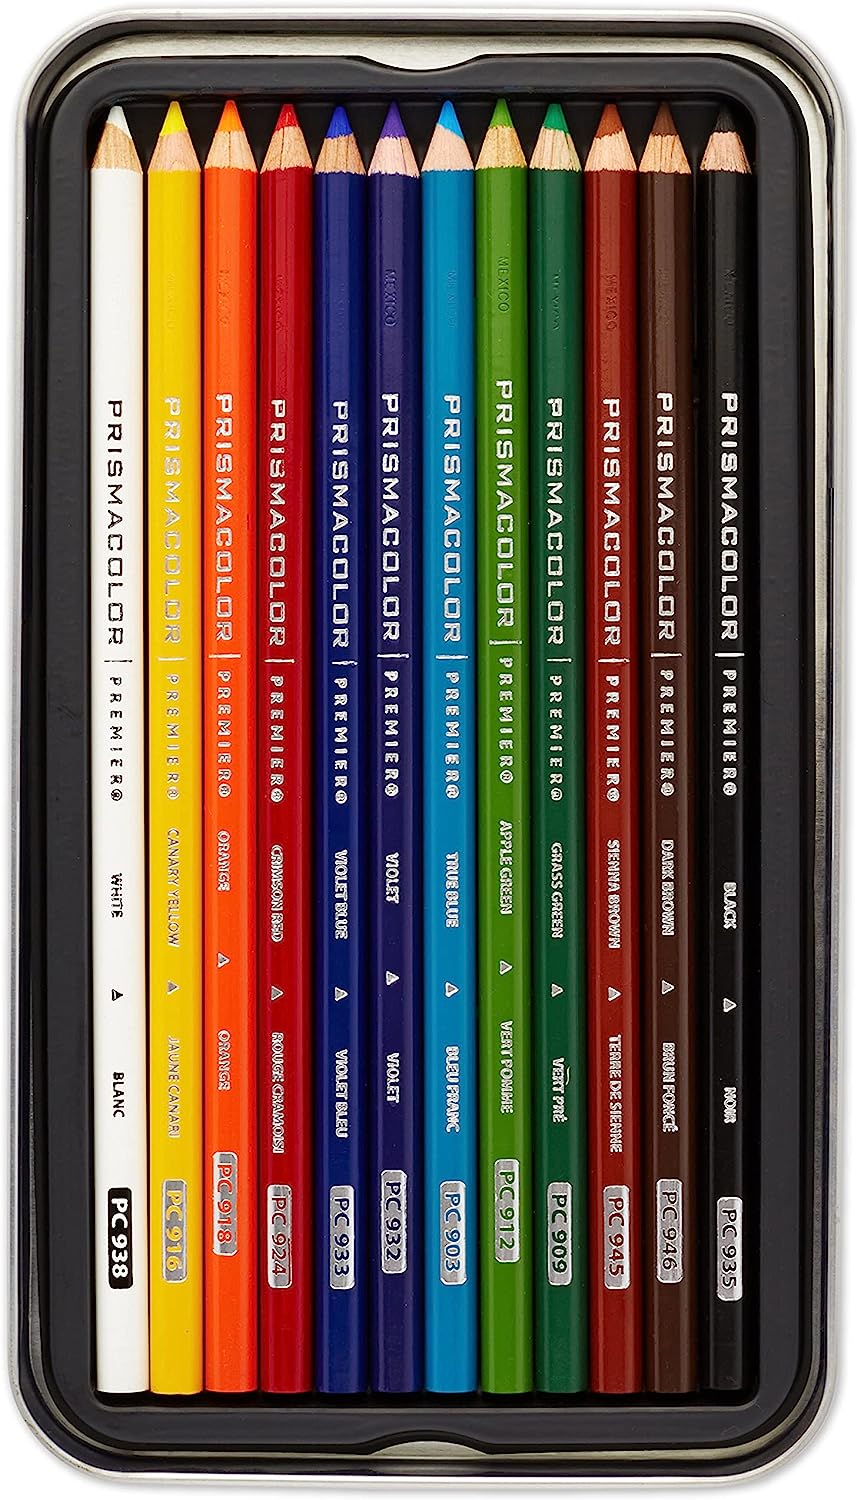 Prismacolor Colored Pencil Set of 12 - Original